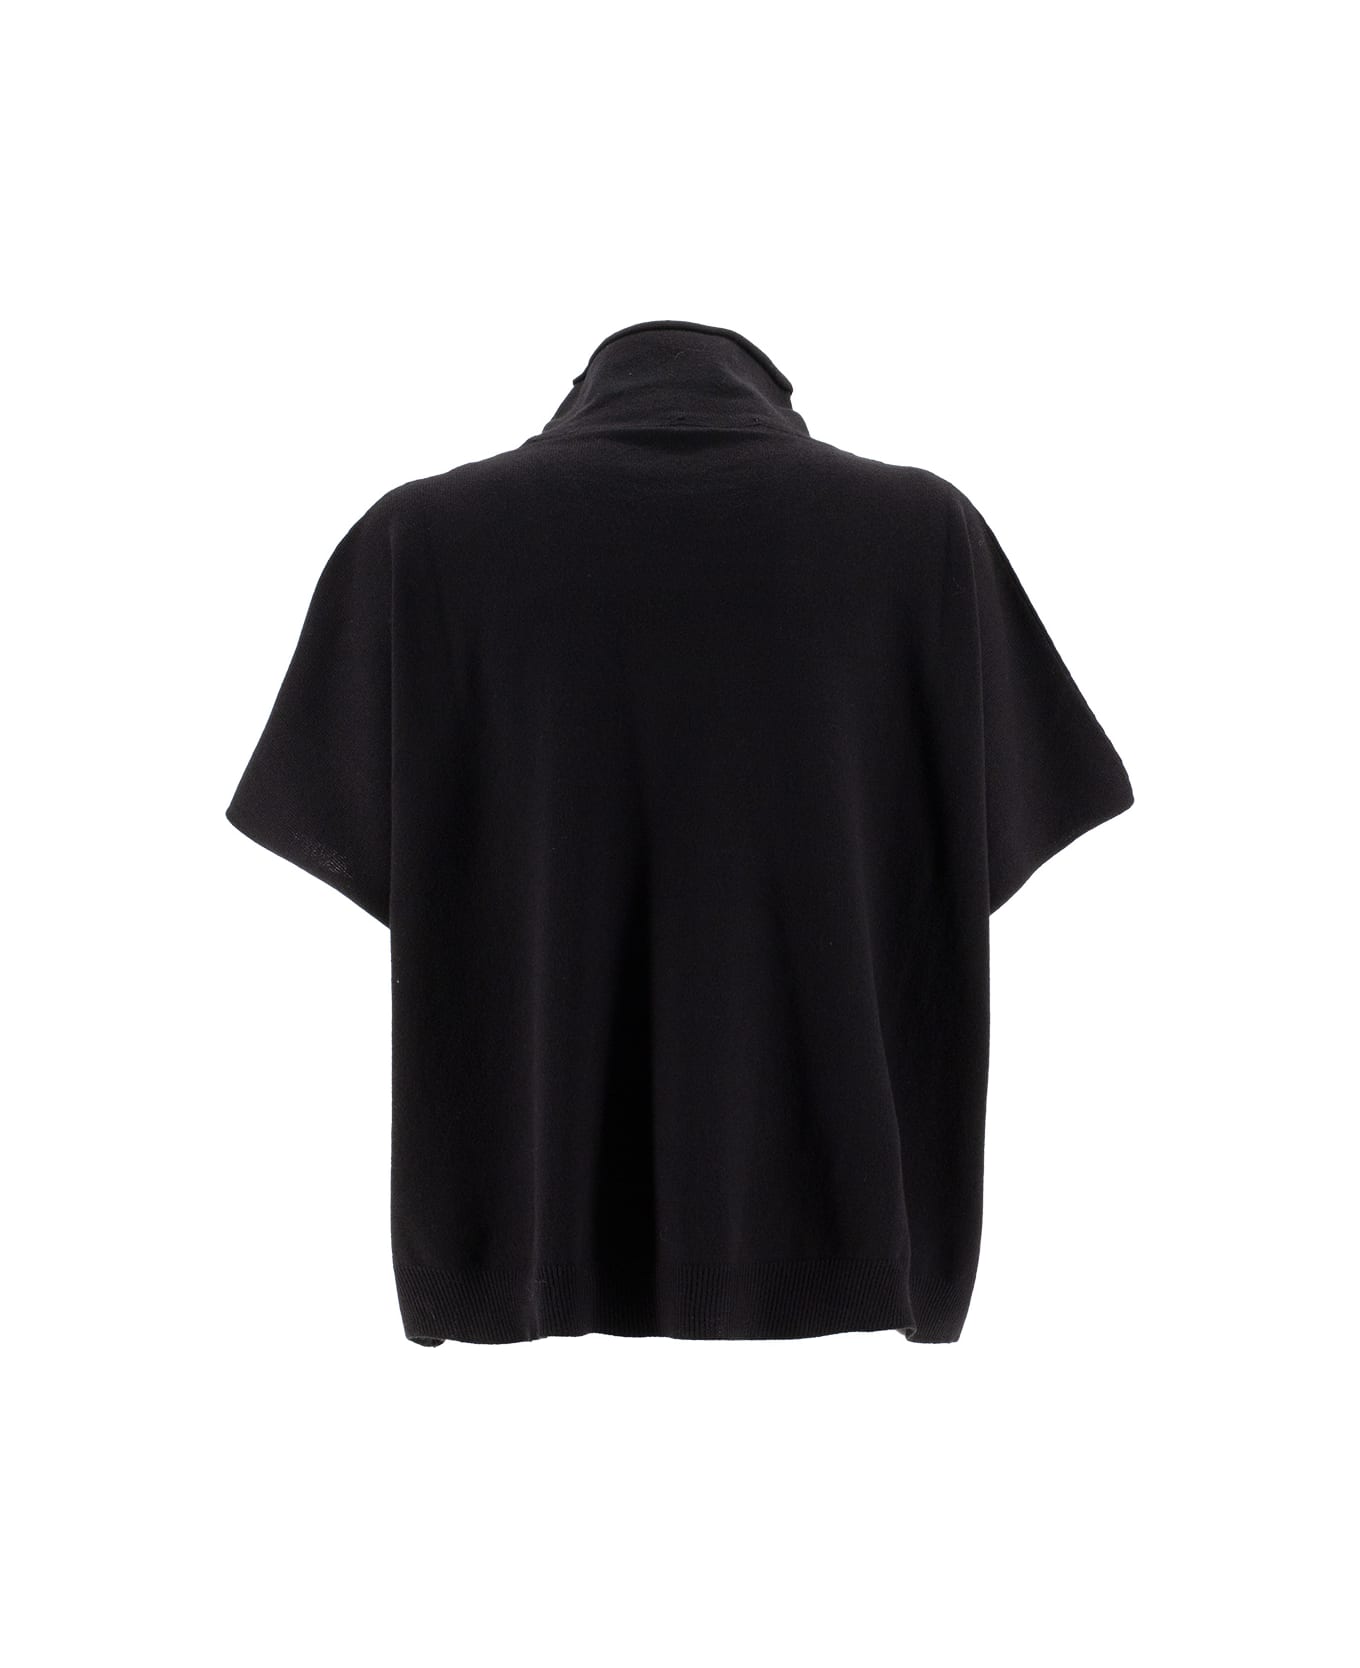 Le Tricot Perugia Sweater - BLACK ニットウェア